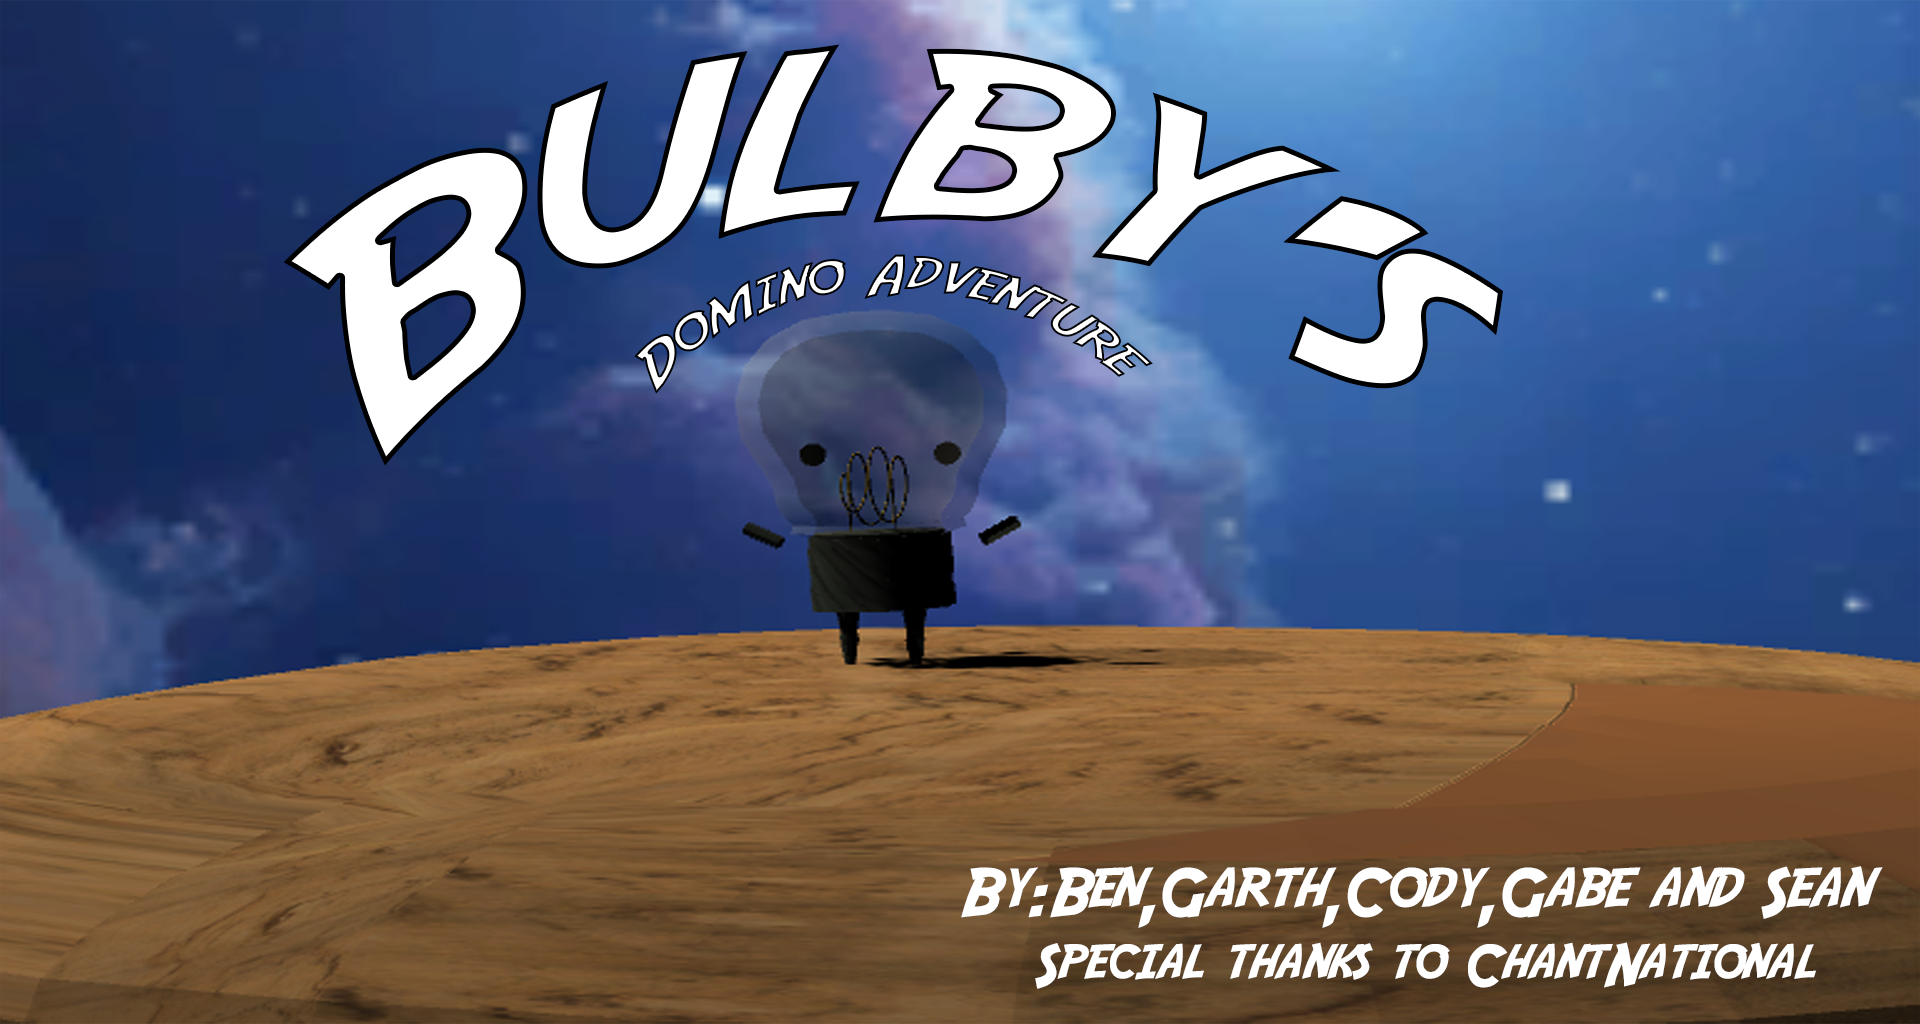 Bulby's Domino Adventure